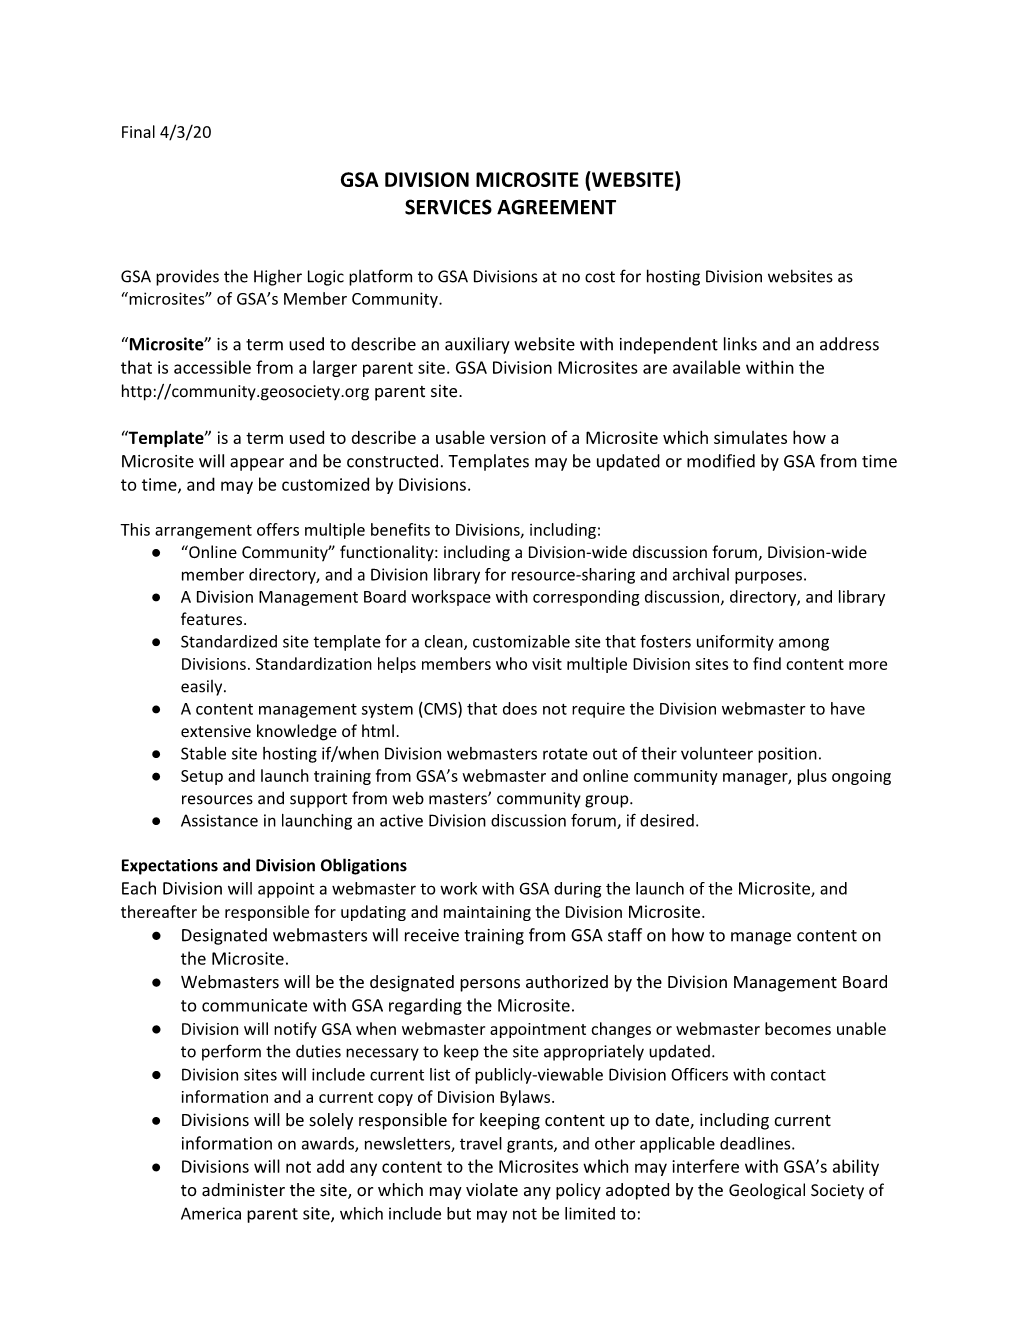 Gsa Division Microsite (Website) Services Agreement